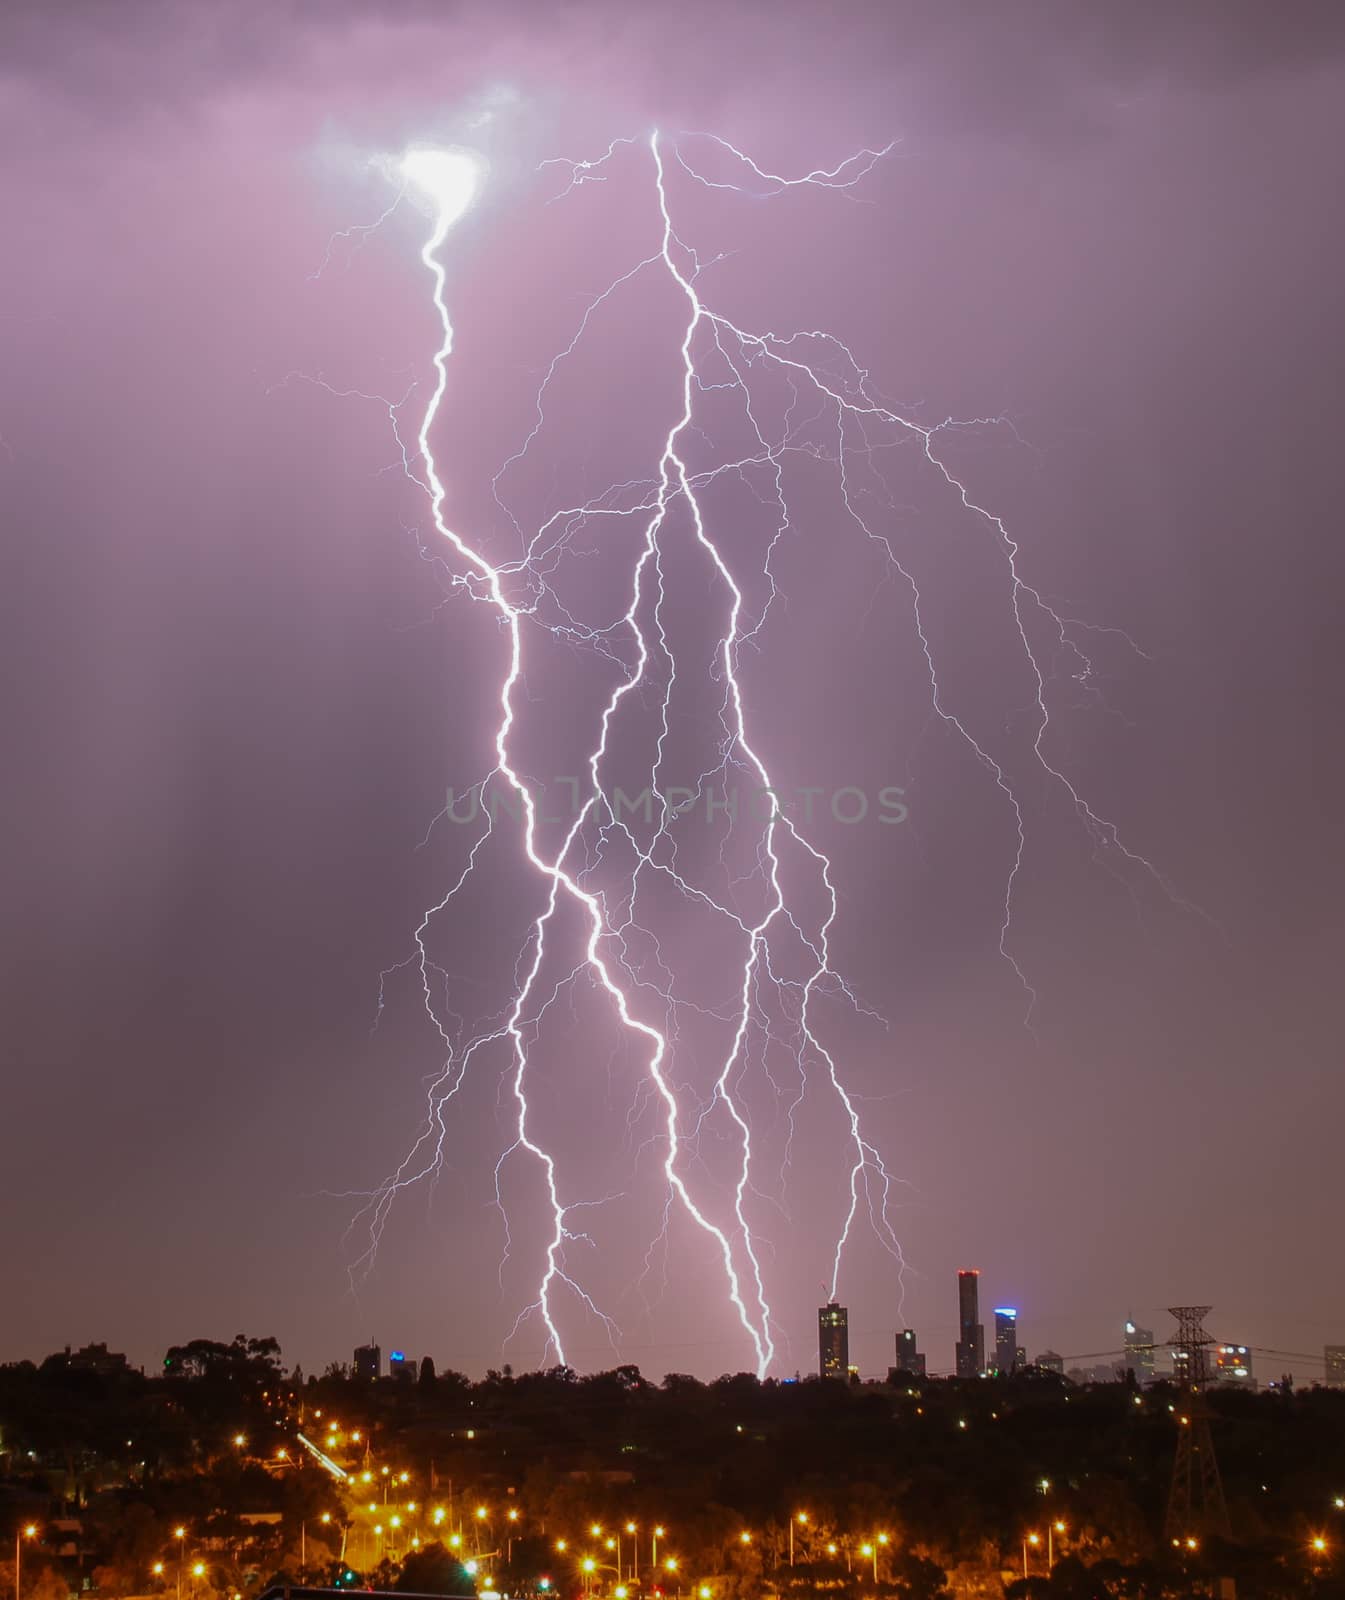 Lightning over city skyline by danieldep